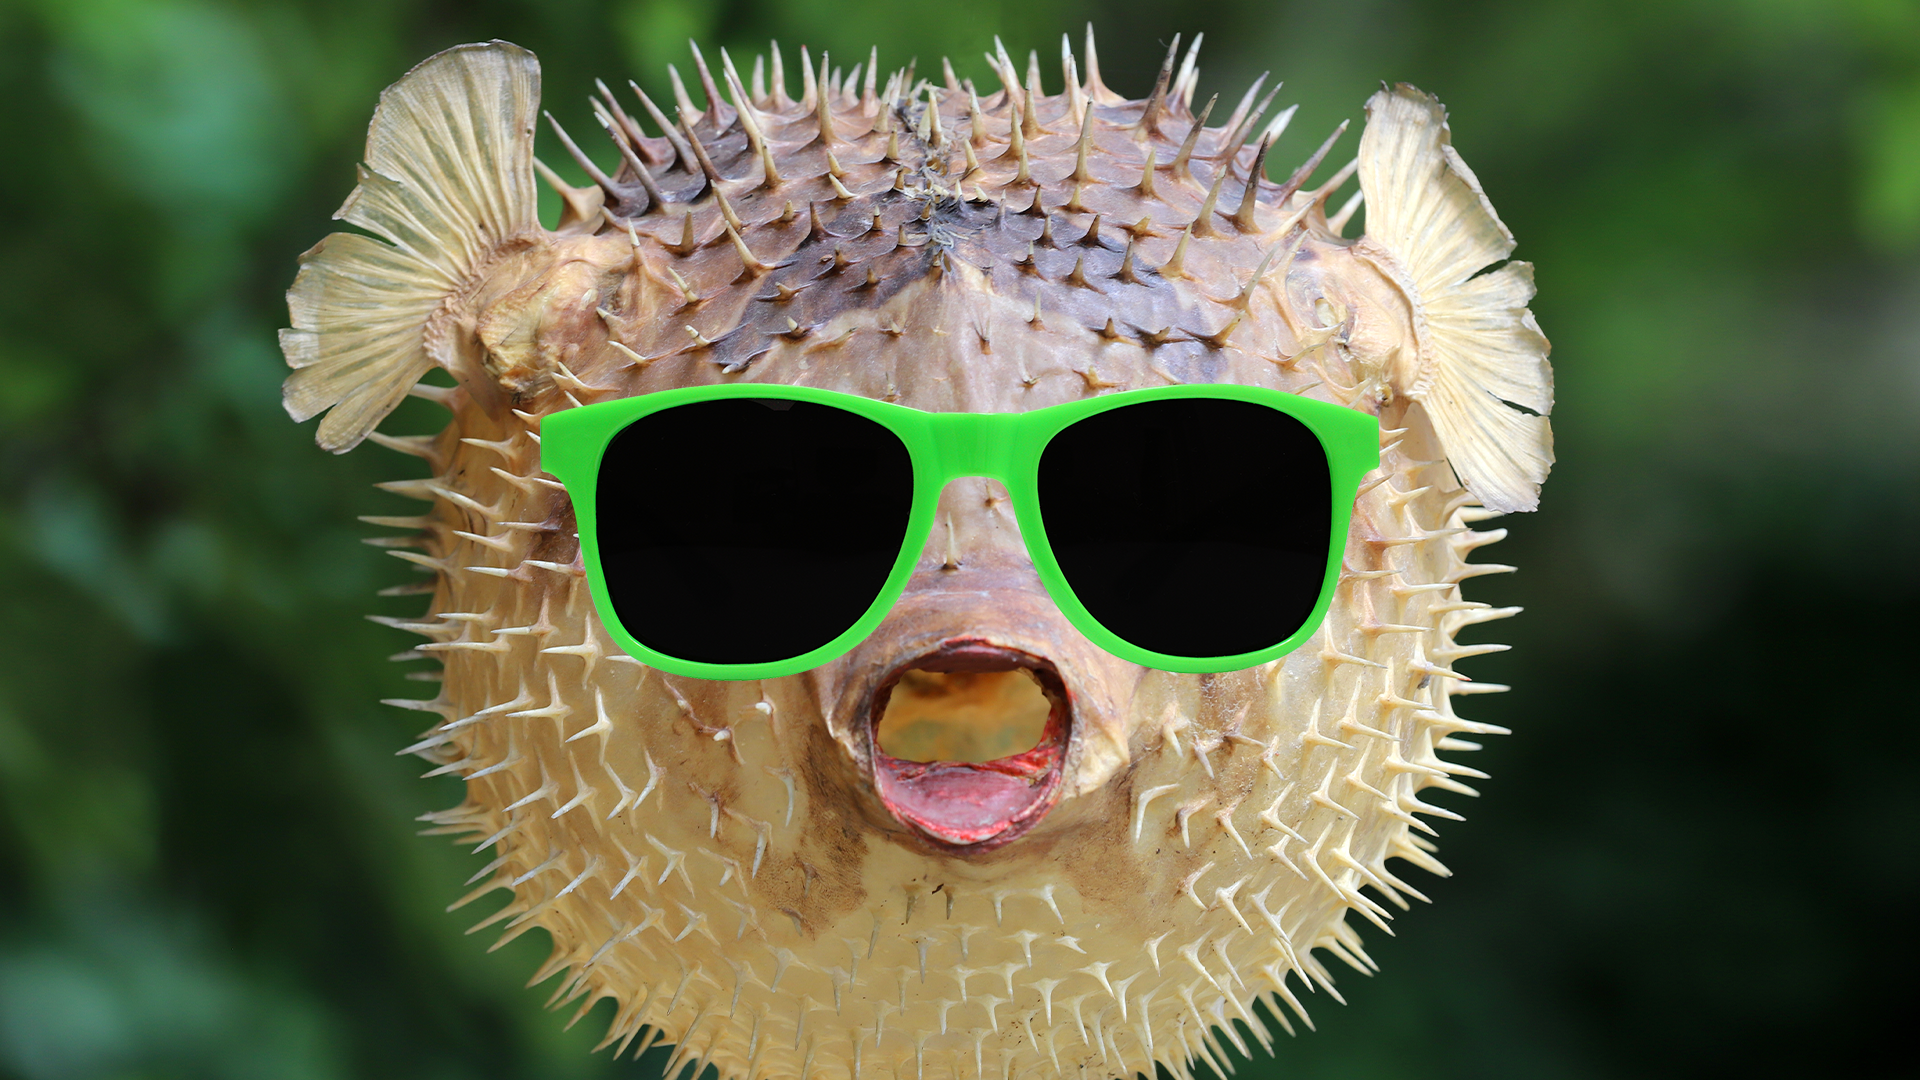 Pufferfish with sunglasses